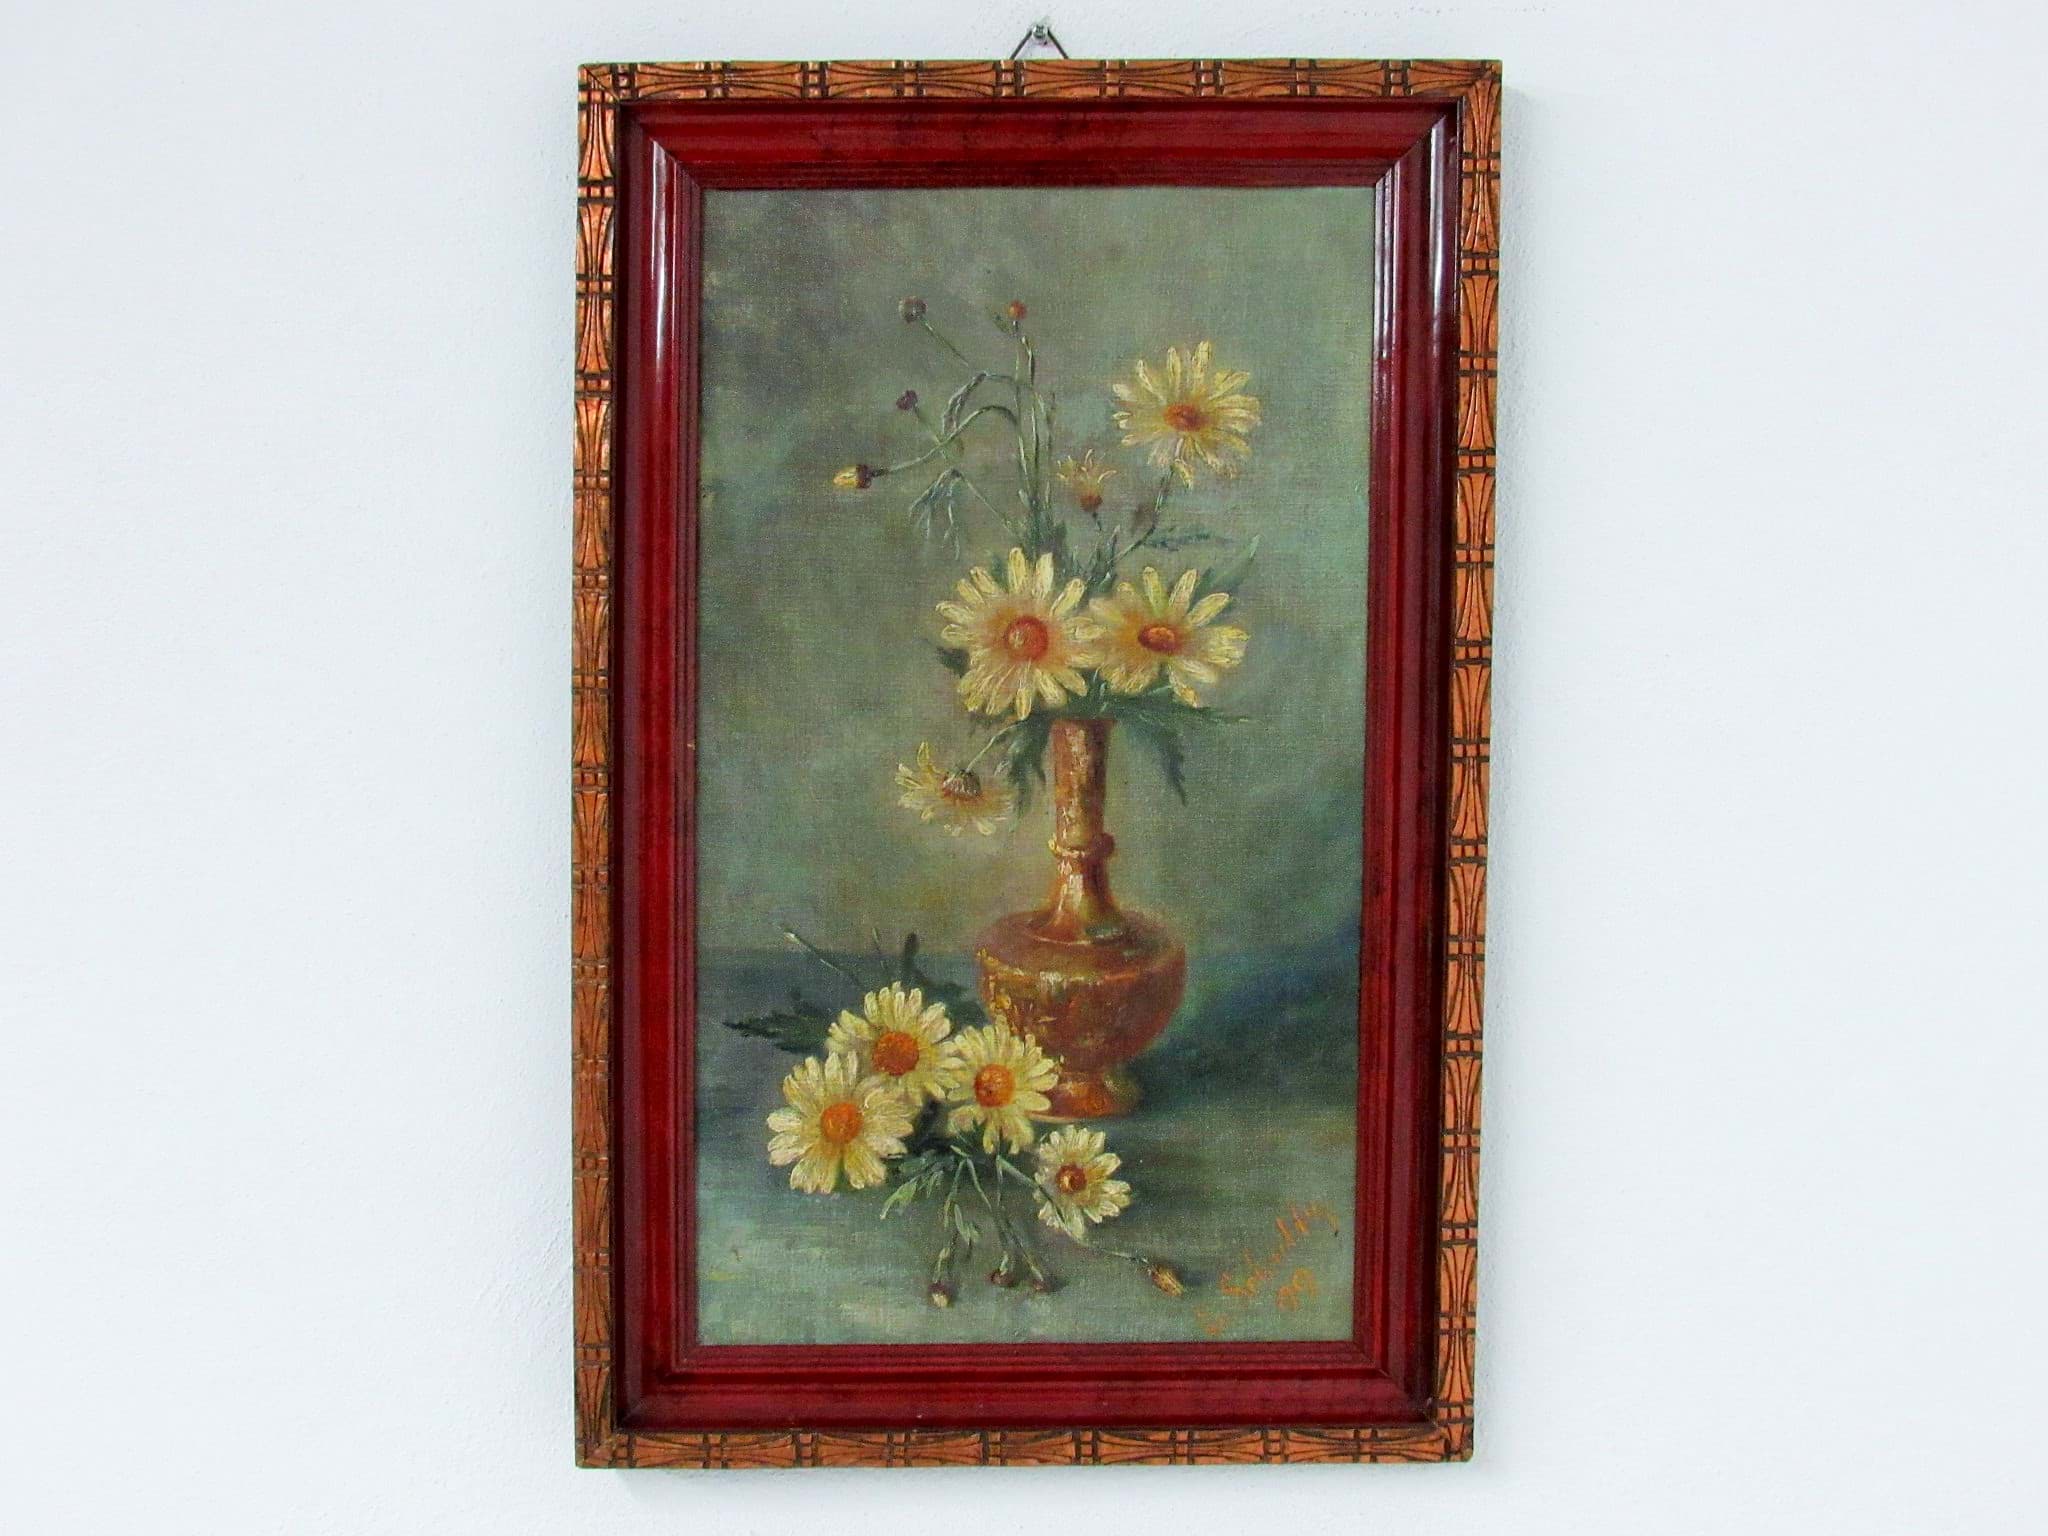 Image de Antik Gemälde / Ölbild, Blumen Stillleben um 1900, Öl/Malkarton, gerahmt, signiert E. Schultz (?) & datiert